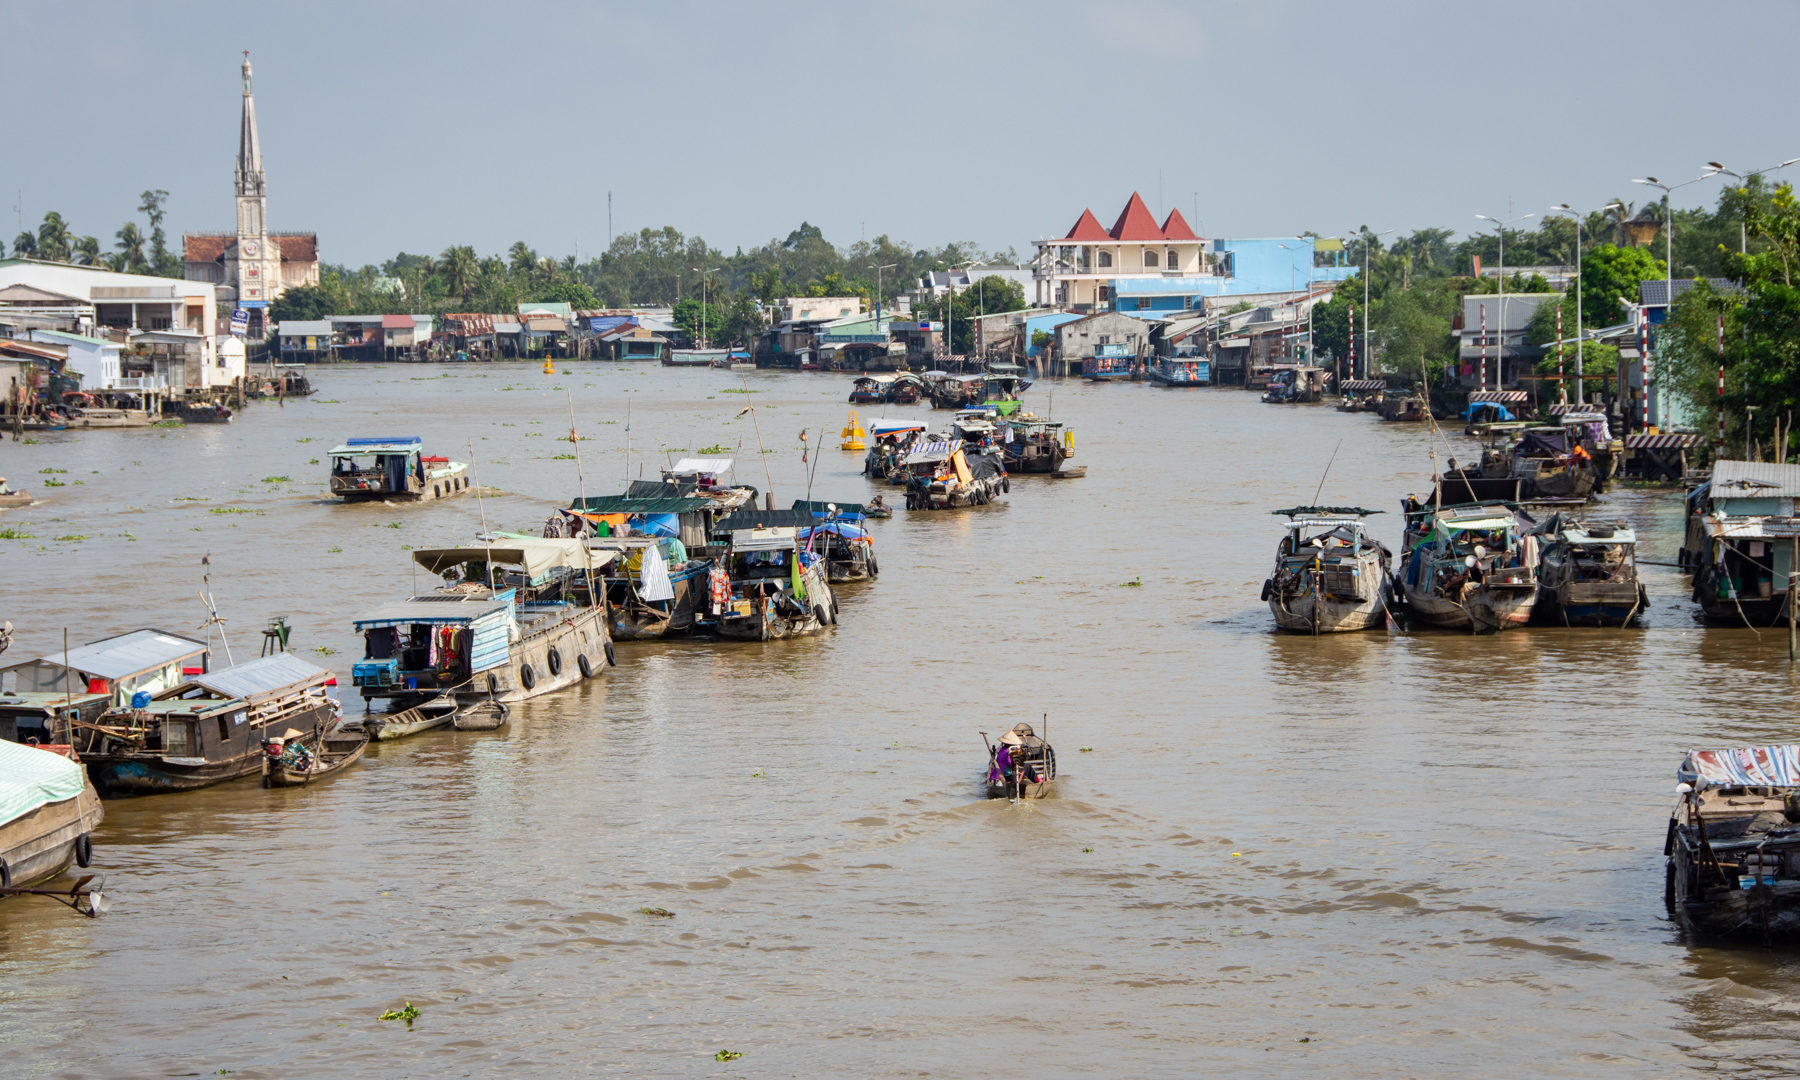 Cai Be Floating Market, Mekong Delta, Vietnam